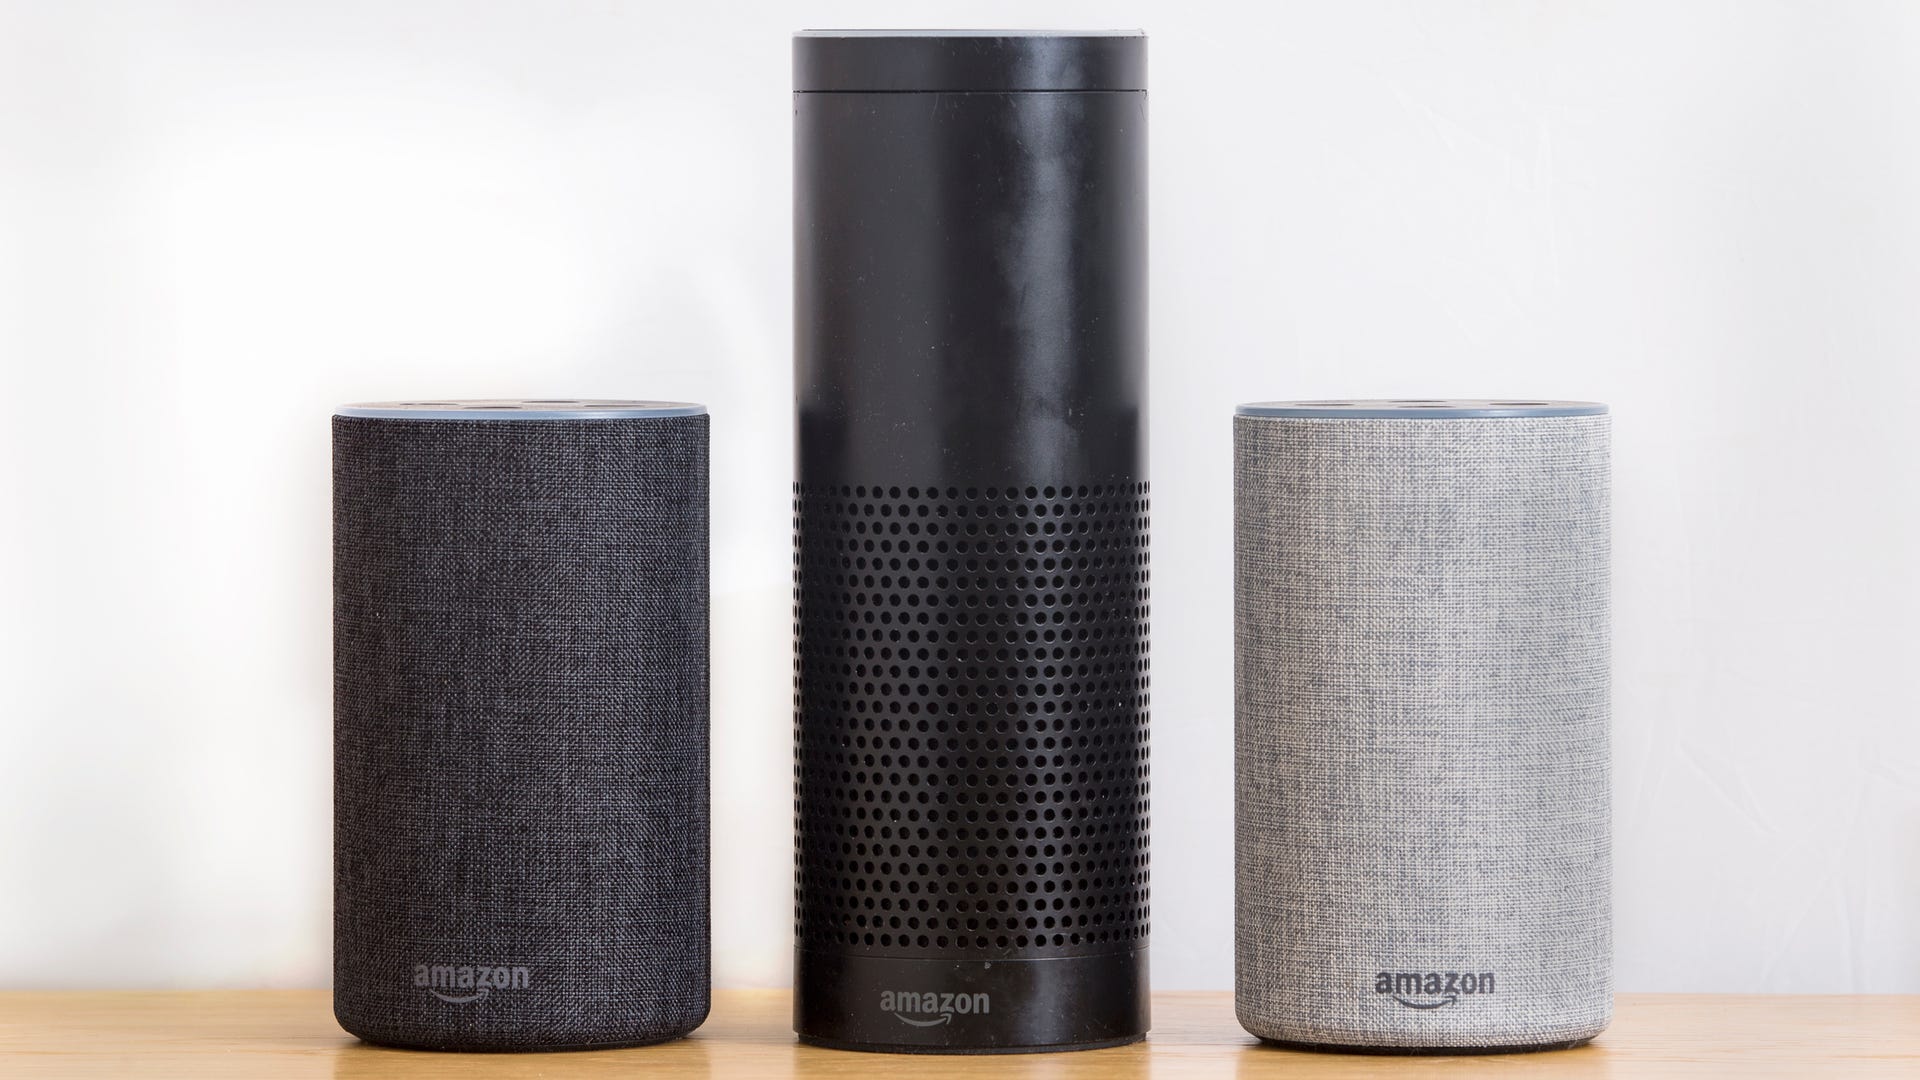 Amazon Echo Alexa Smart Speakers. 1st generation echo in the middle and 2nd generation speakers either side.